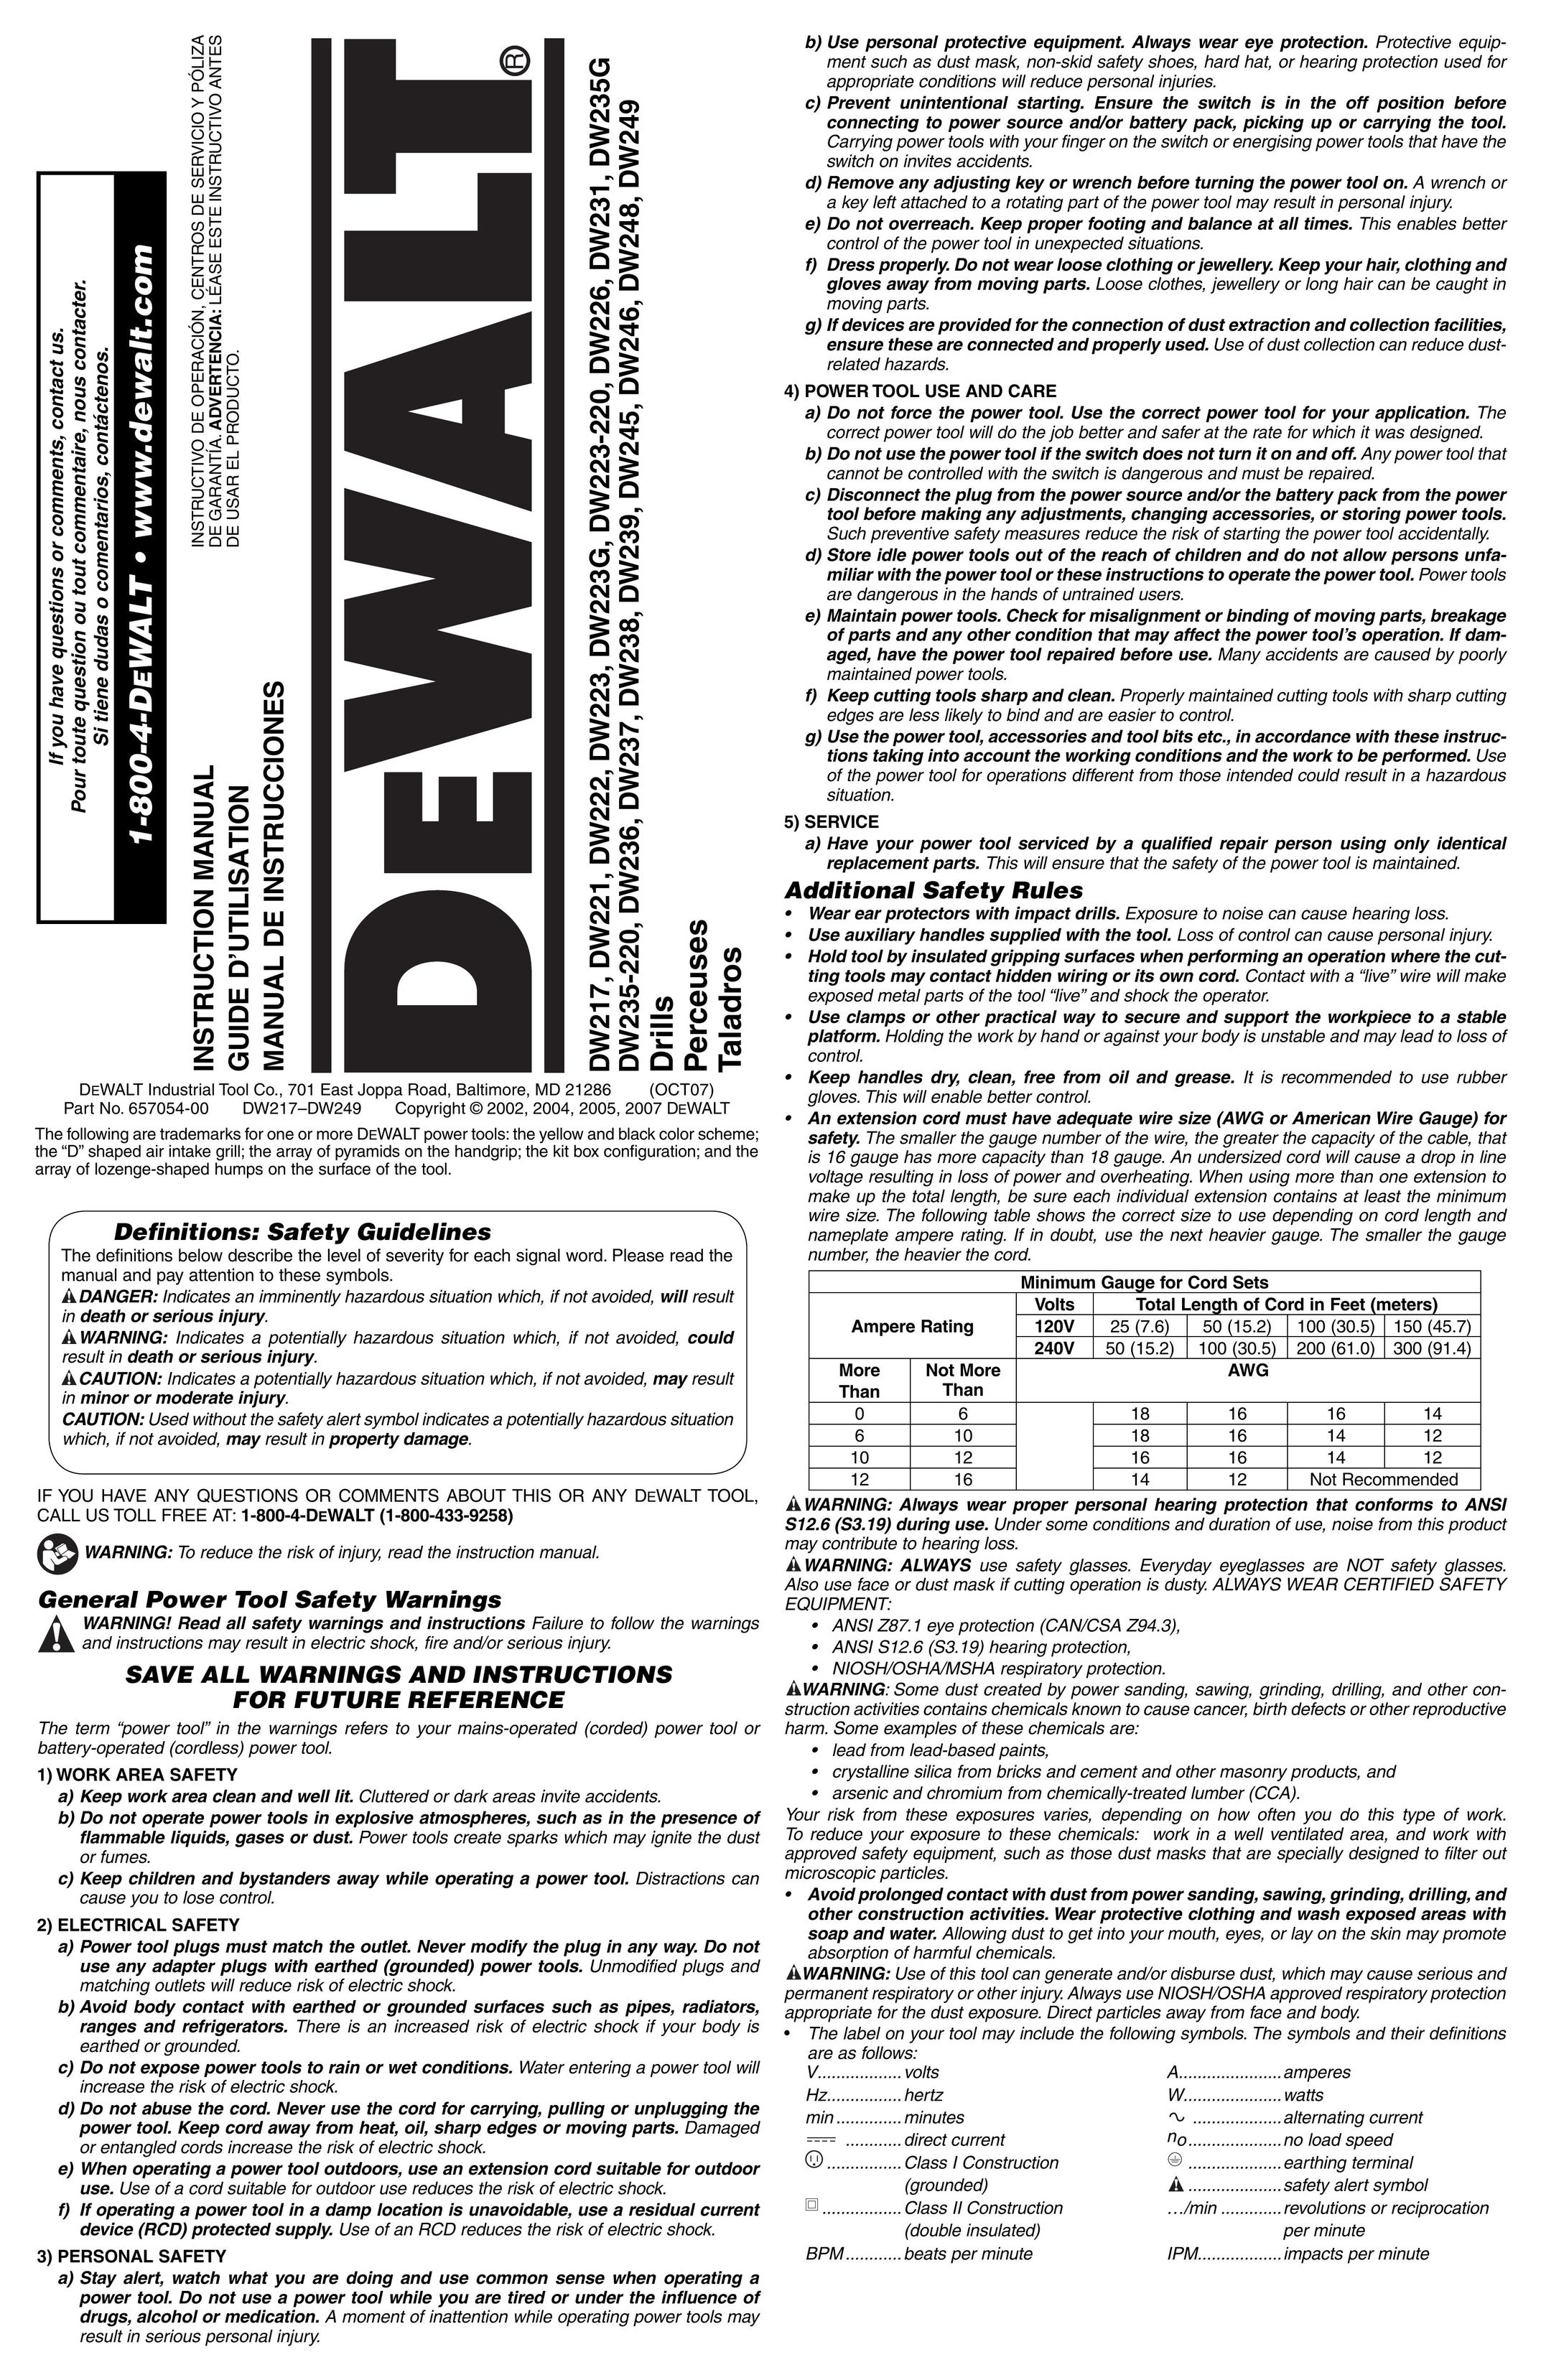 DeWalt DW236 Drill User Manual